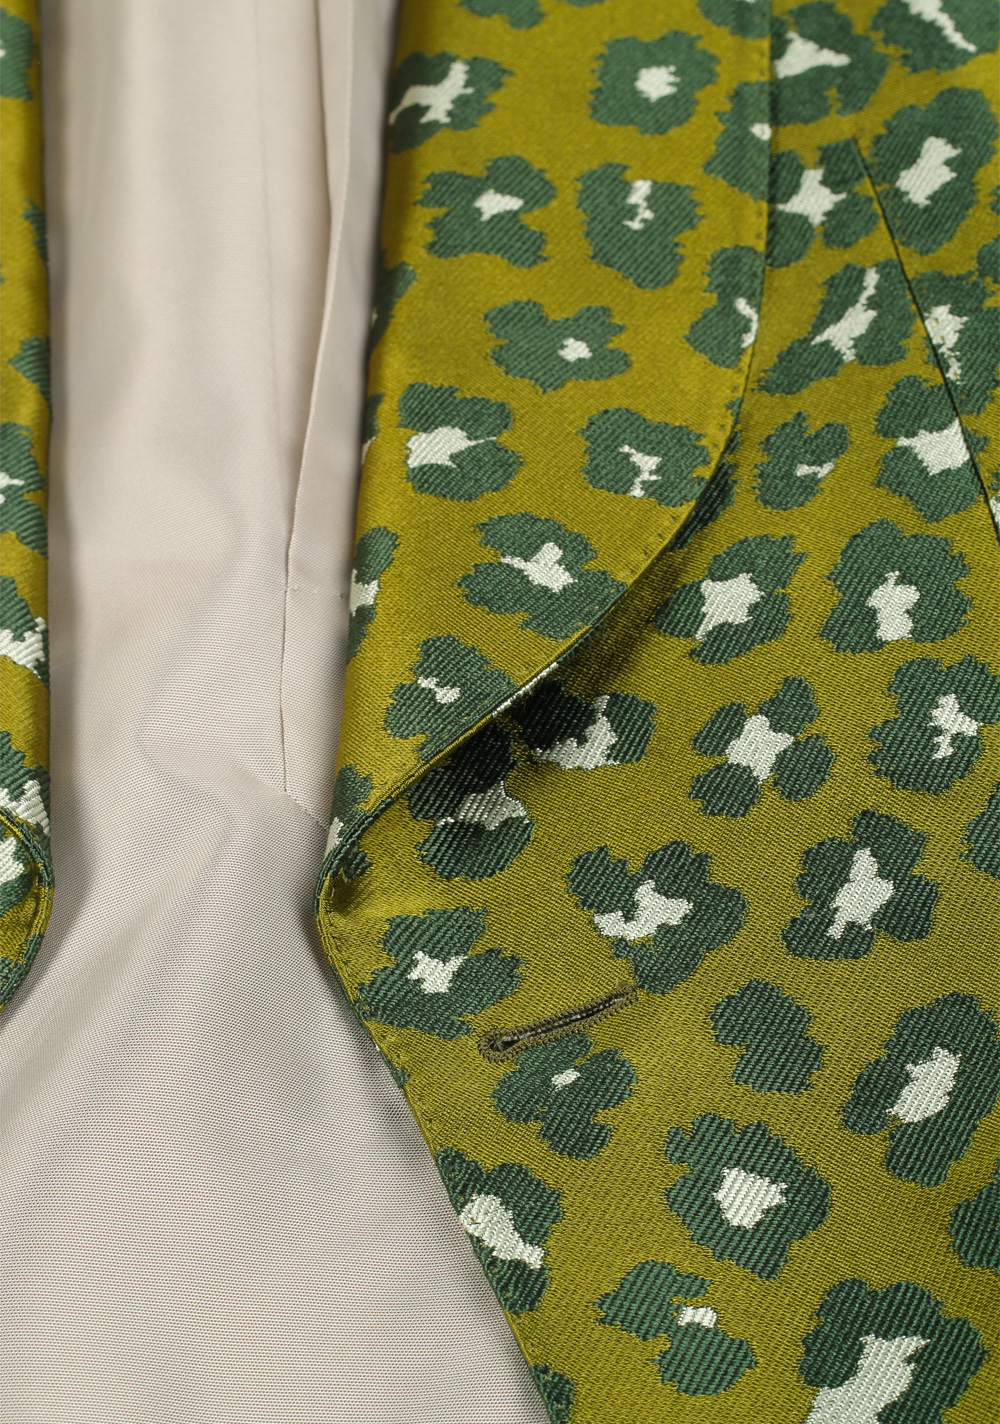 TOM FORD Atticus Green Tuxedo Dinner Jacket Size 46 / 36R U.S. | Costume Limité